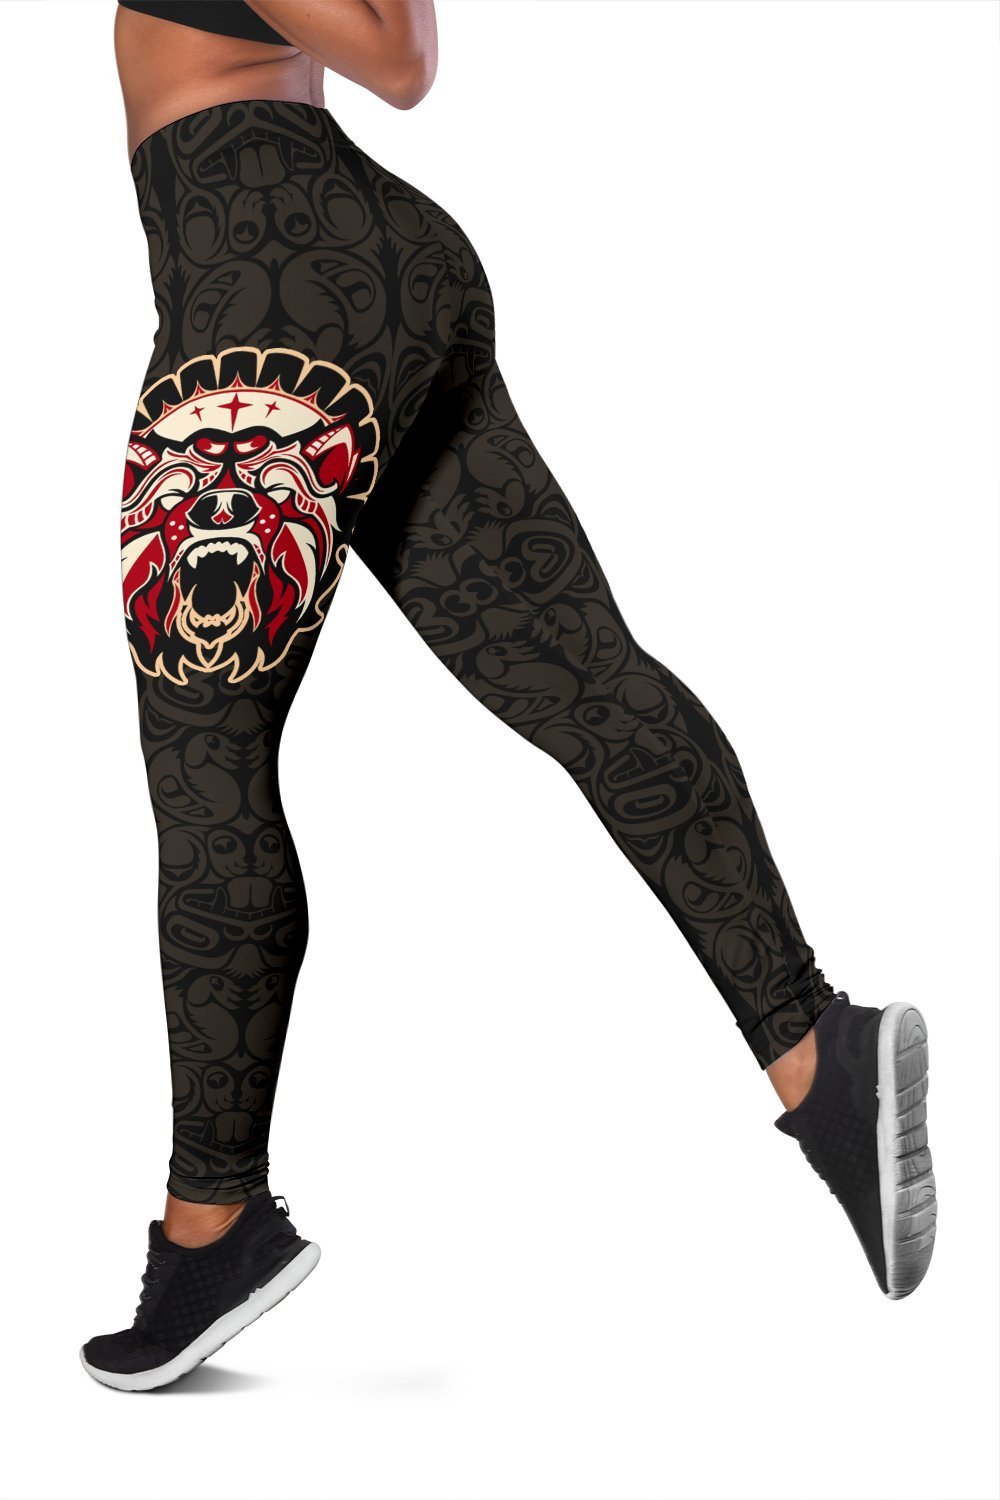 wonder-print-shop-womens-leggings-haida-bear-tattoo-version-20